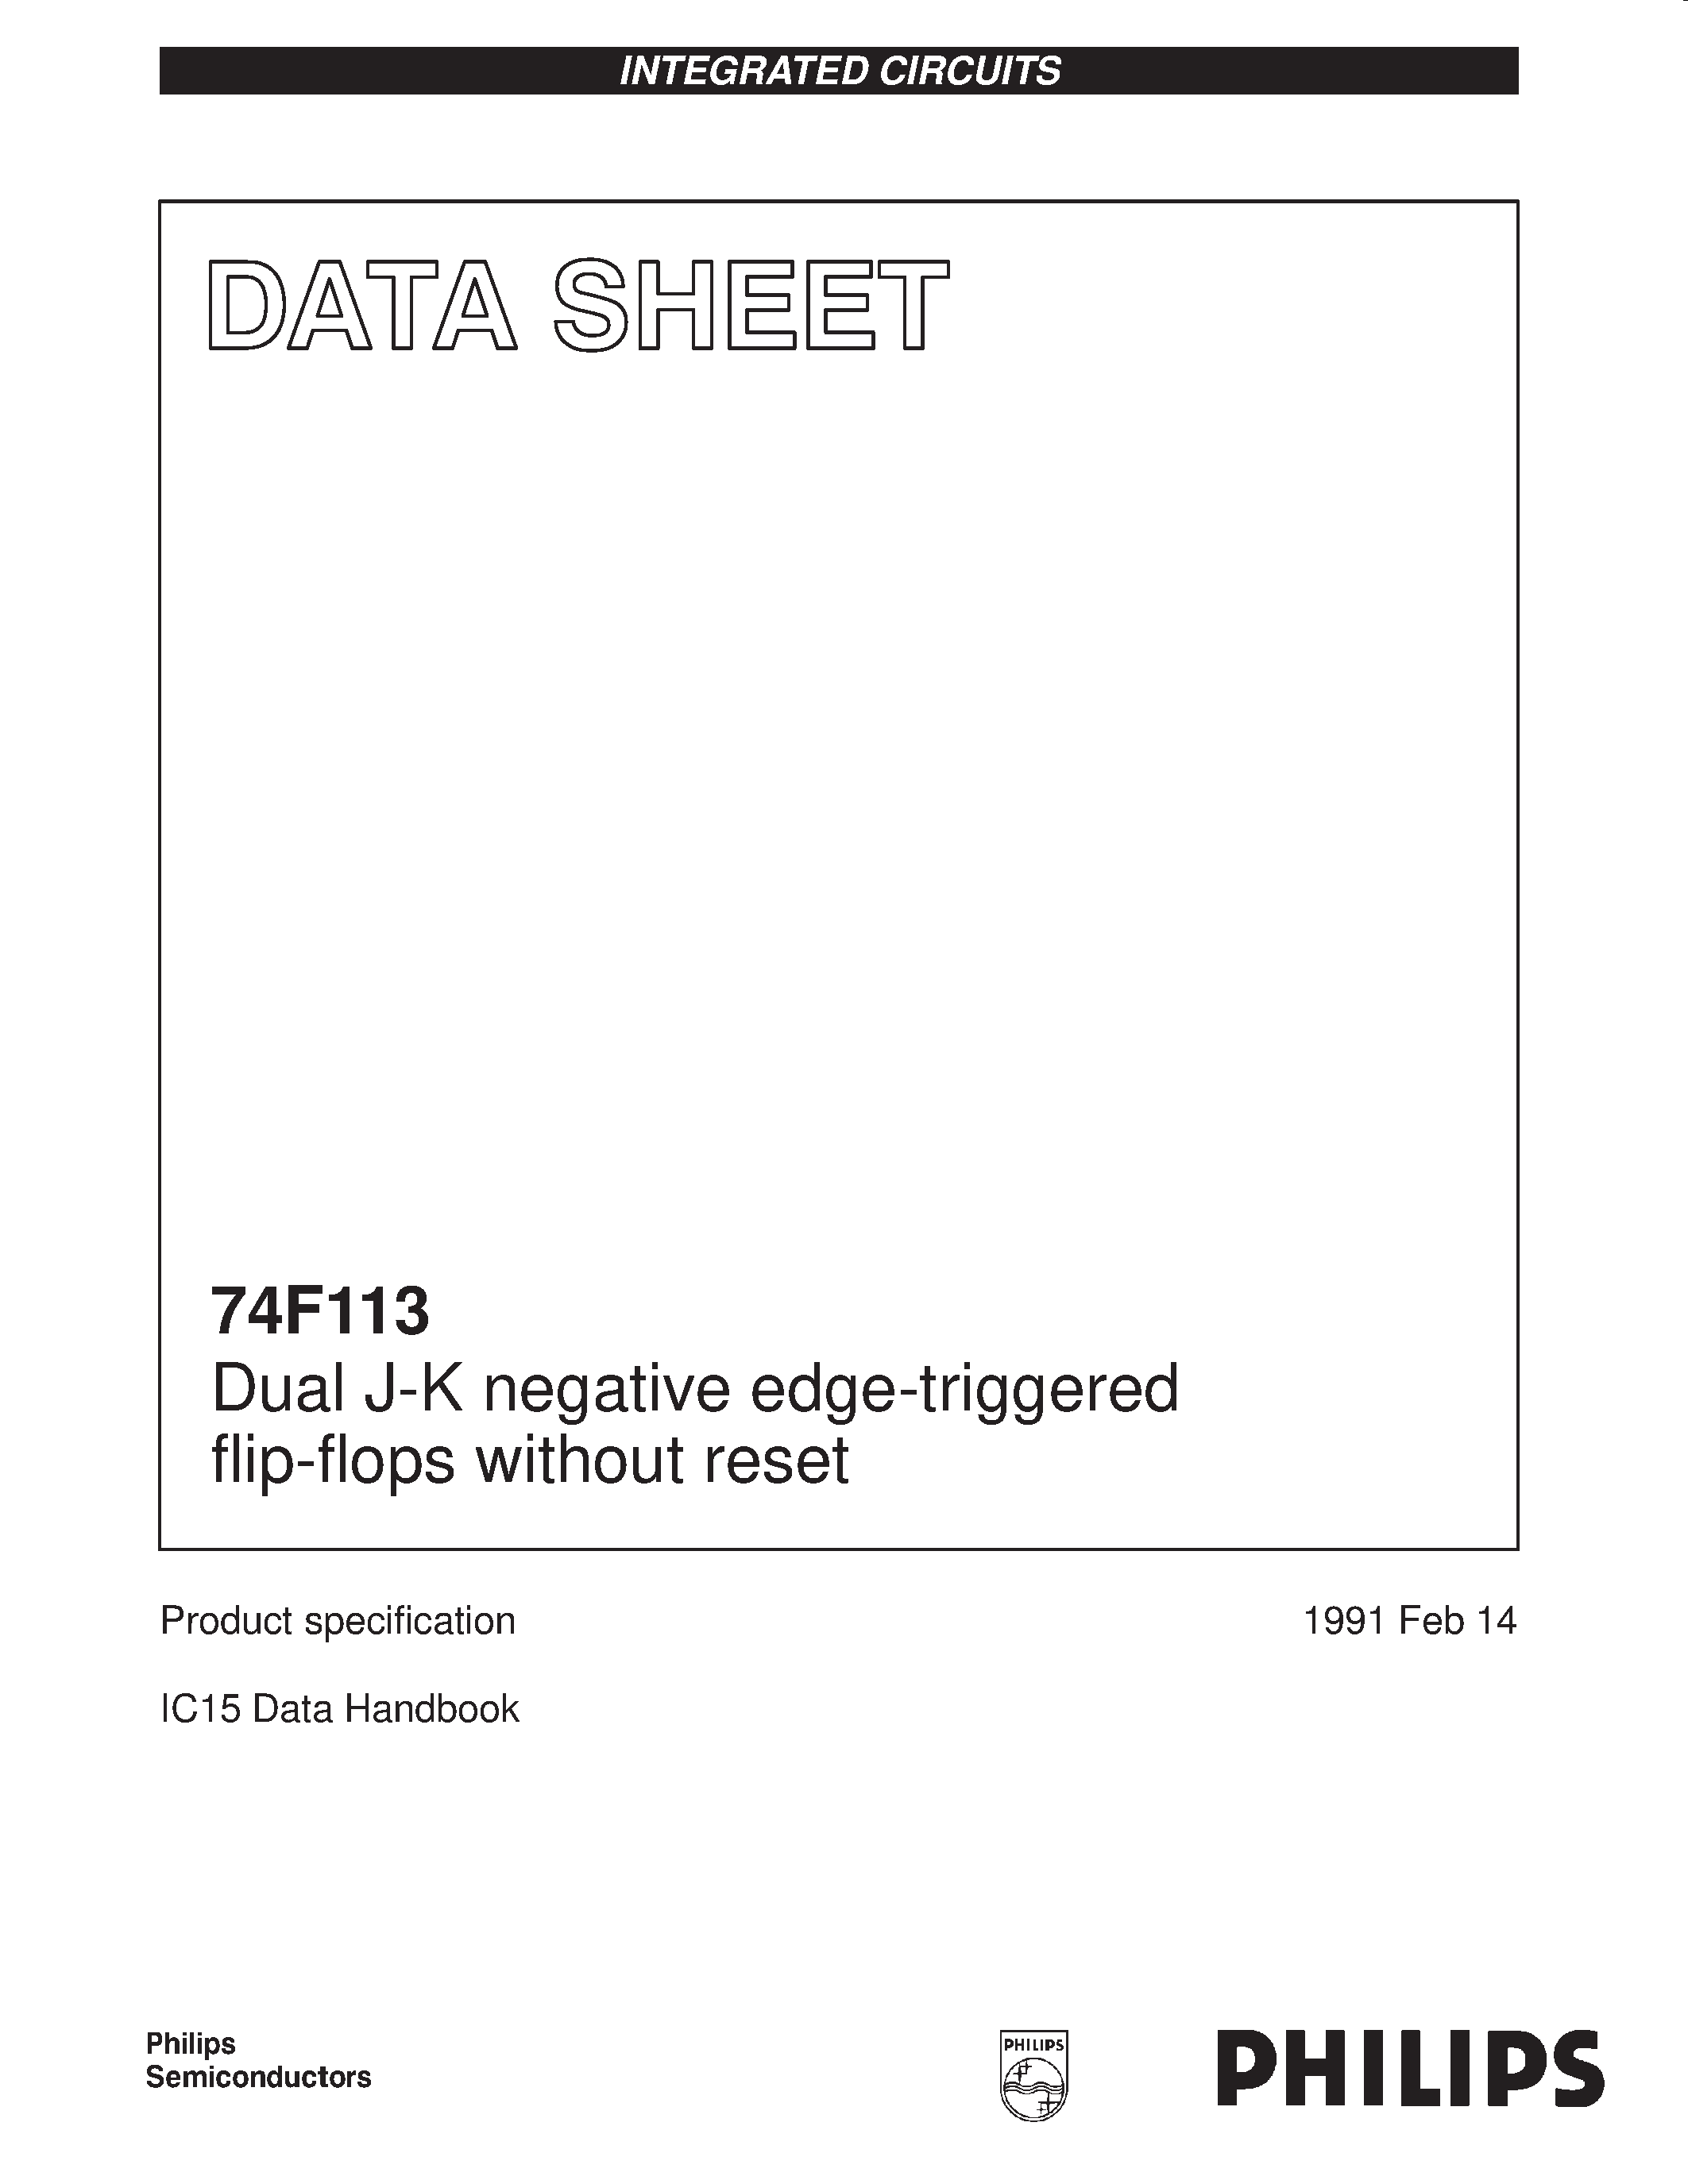 Даташит N74F113D - Dual J-K negative edge-triggered flip-flops without reset страница 1